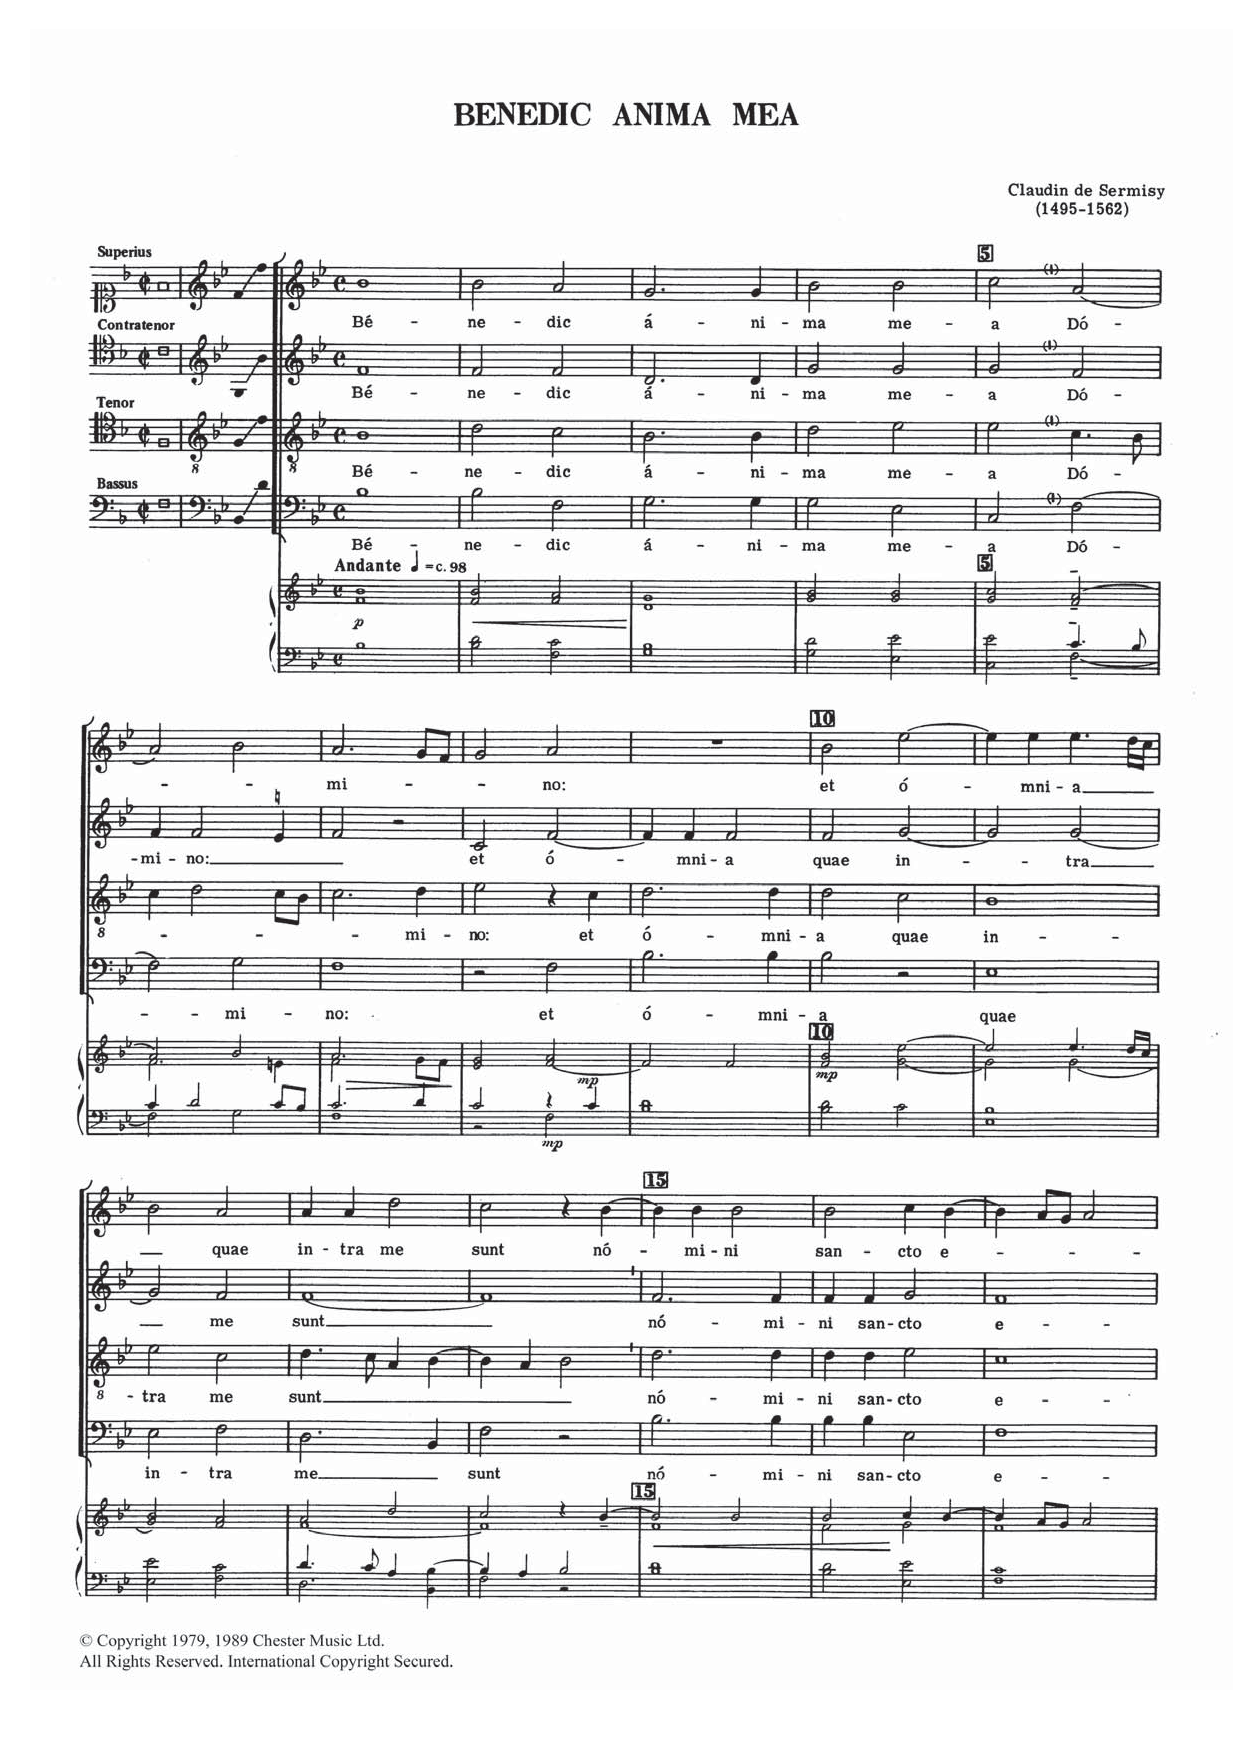 Claudin de Sermisy Benedic Anima Mea sheet music notes and chords arranged for Choir